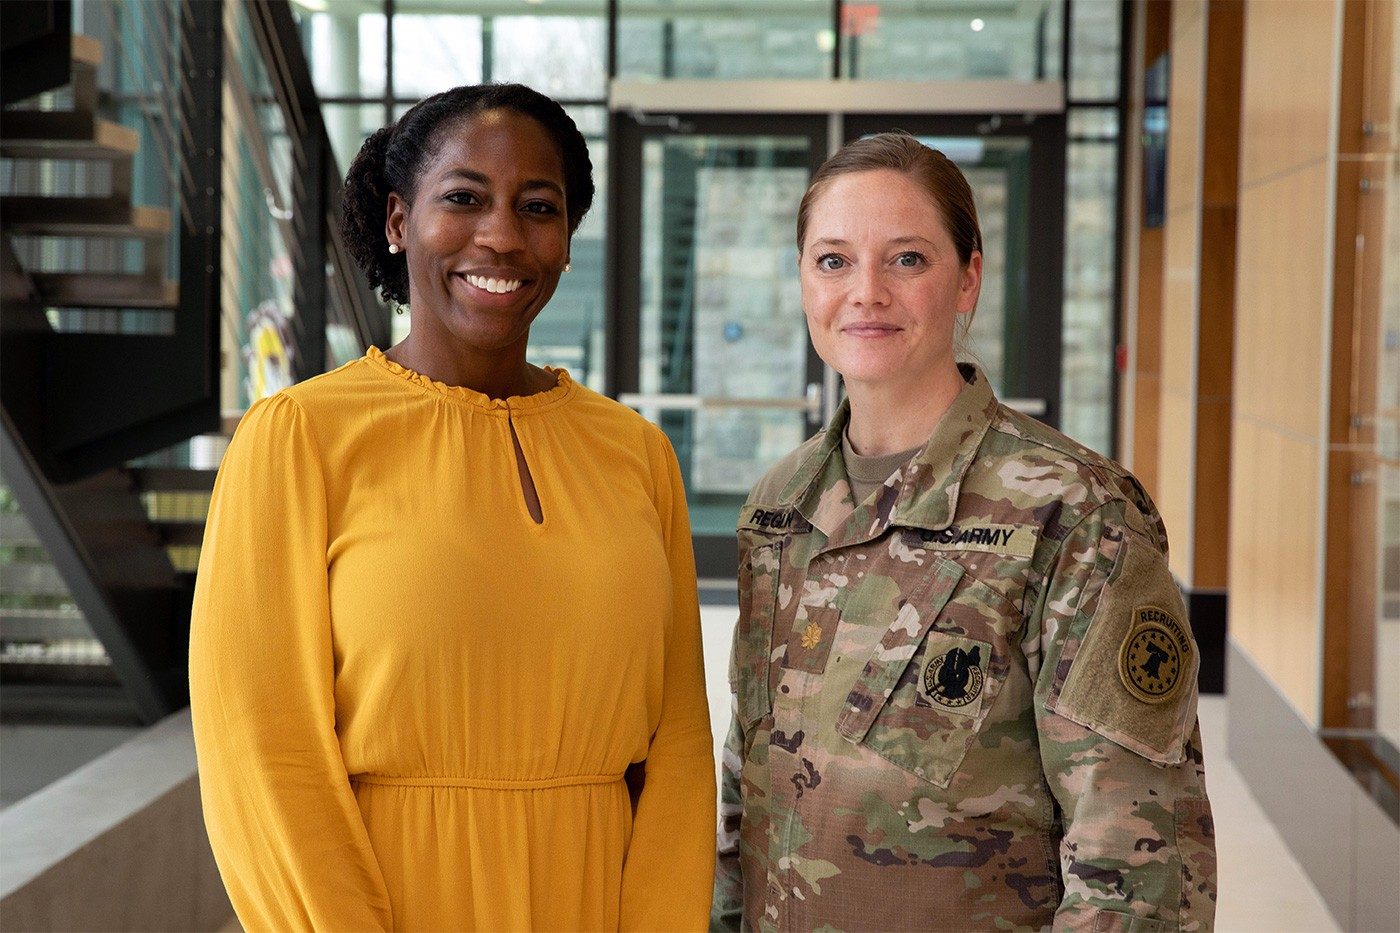 VMCVM graduate Lauren Dodd with Maj. Megan Reglin, U.S. Army Nurse Corps